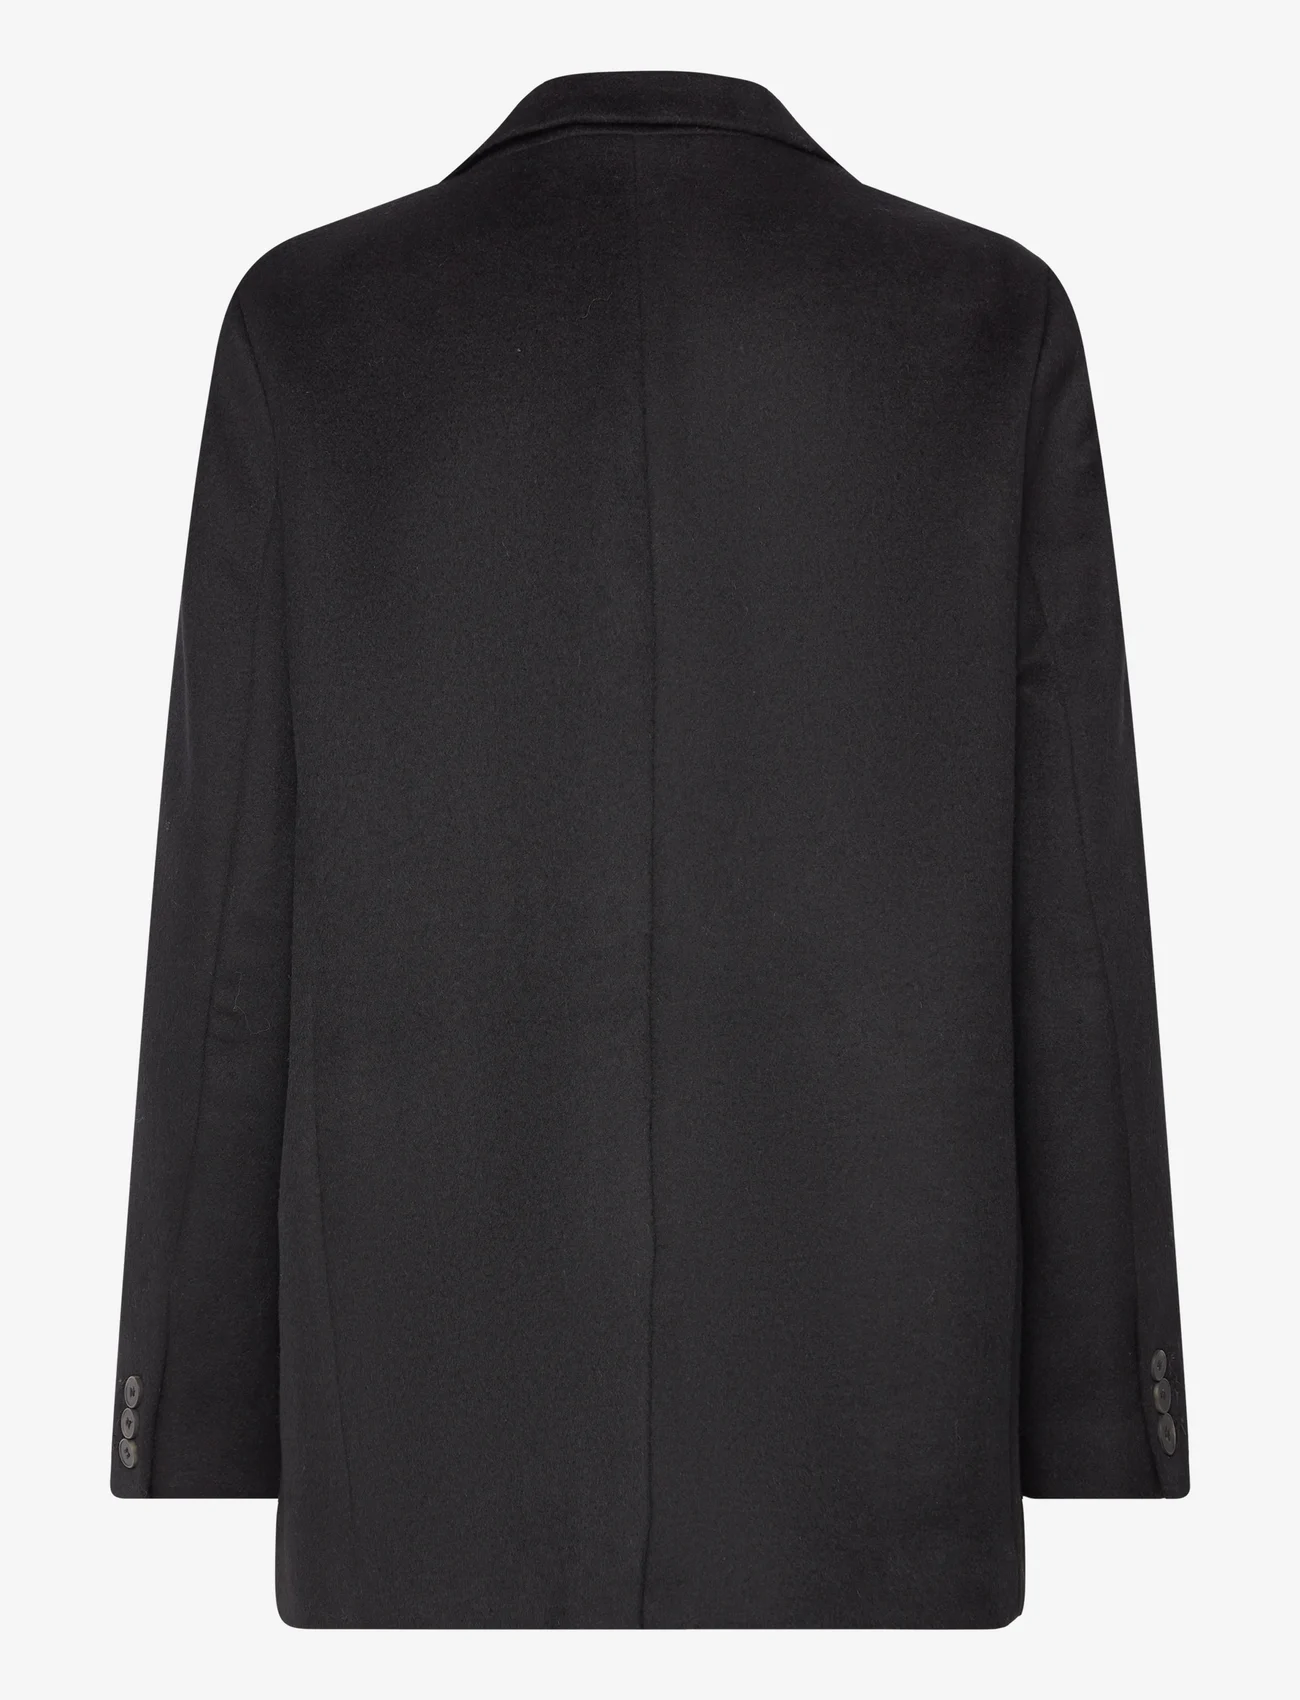 Selected Femme - SLFSASJA WOOL BLAZER B - ballīšu apģērbs par outlet cenām - black - 1